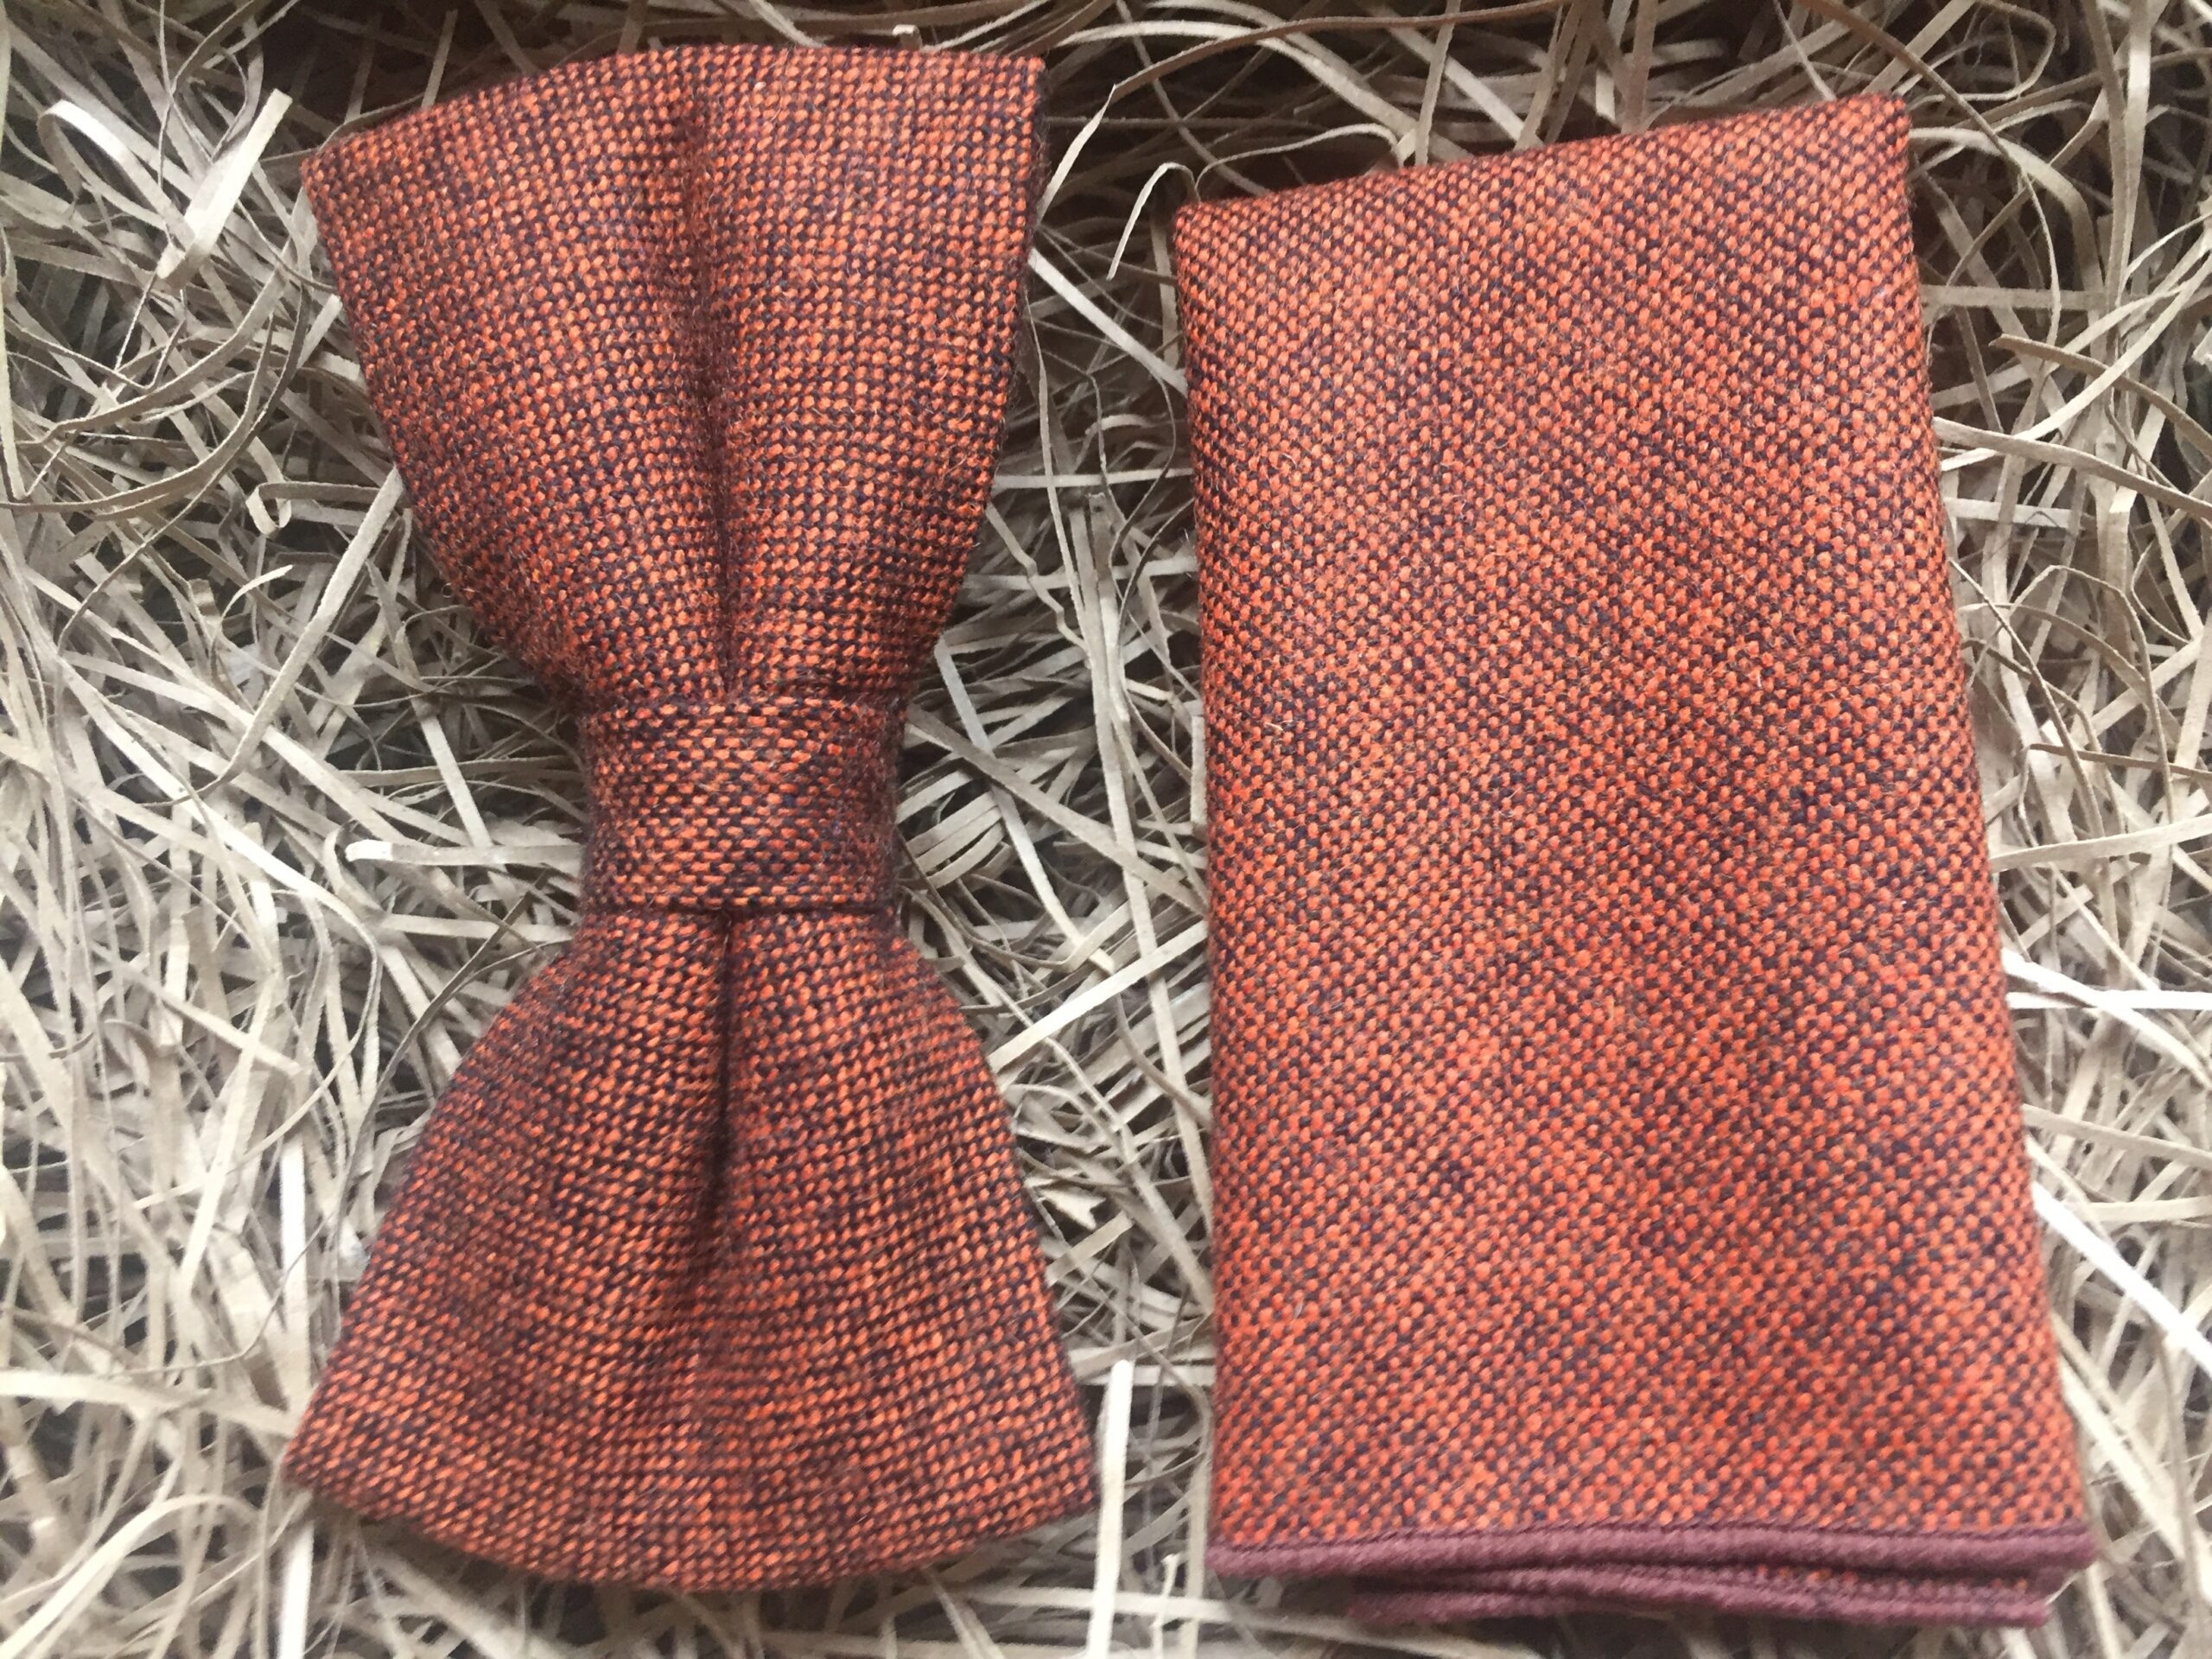 The Maple Burnt Orange Wool Pocket Square